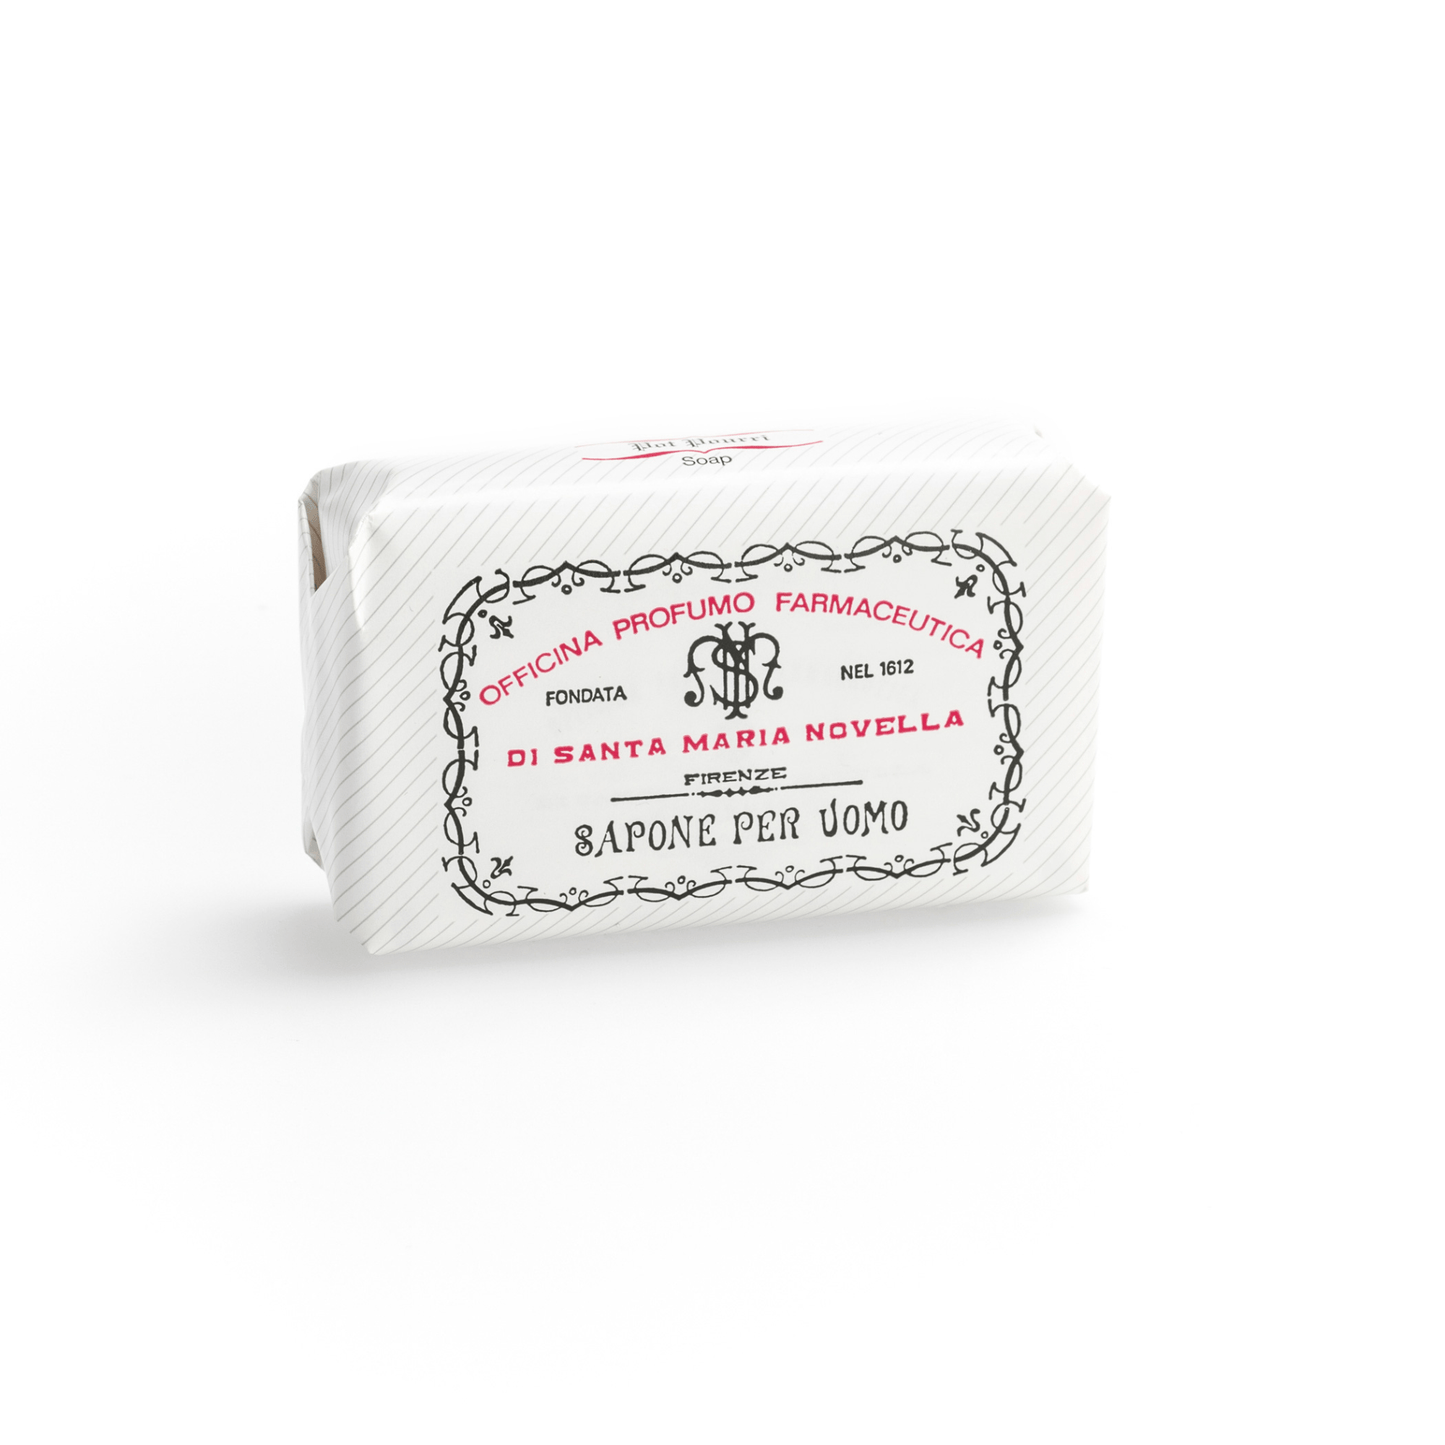 Primary Image of Pot Pourri Soap